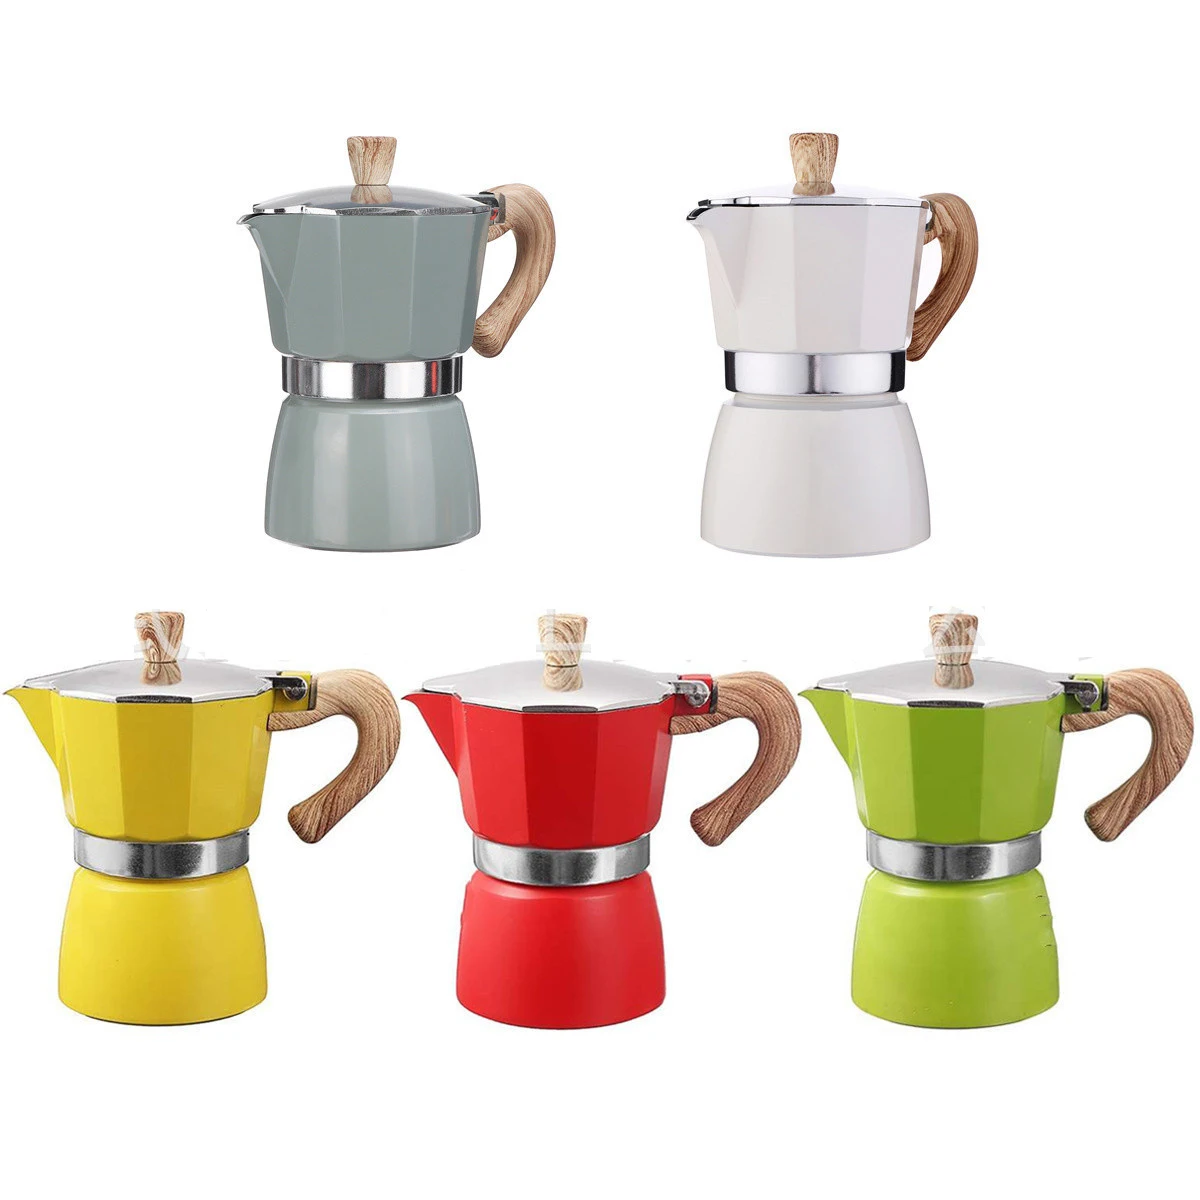 https://ae01.alicdn.com/kf/Sf5849eaf69a74863bede537e84b77cc3s/150-300ml-European-Style-Aluminum-Coffee-Maker-Moka-Cafeteira-Cafeteira-Expresso-Percolator-Pot-Italian-Concentrated-Drip.jpg